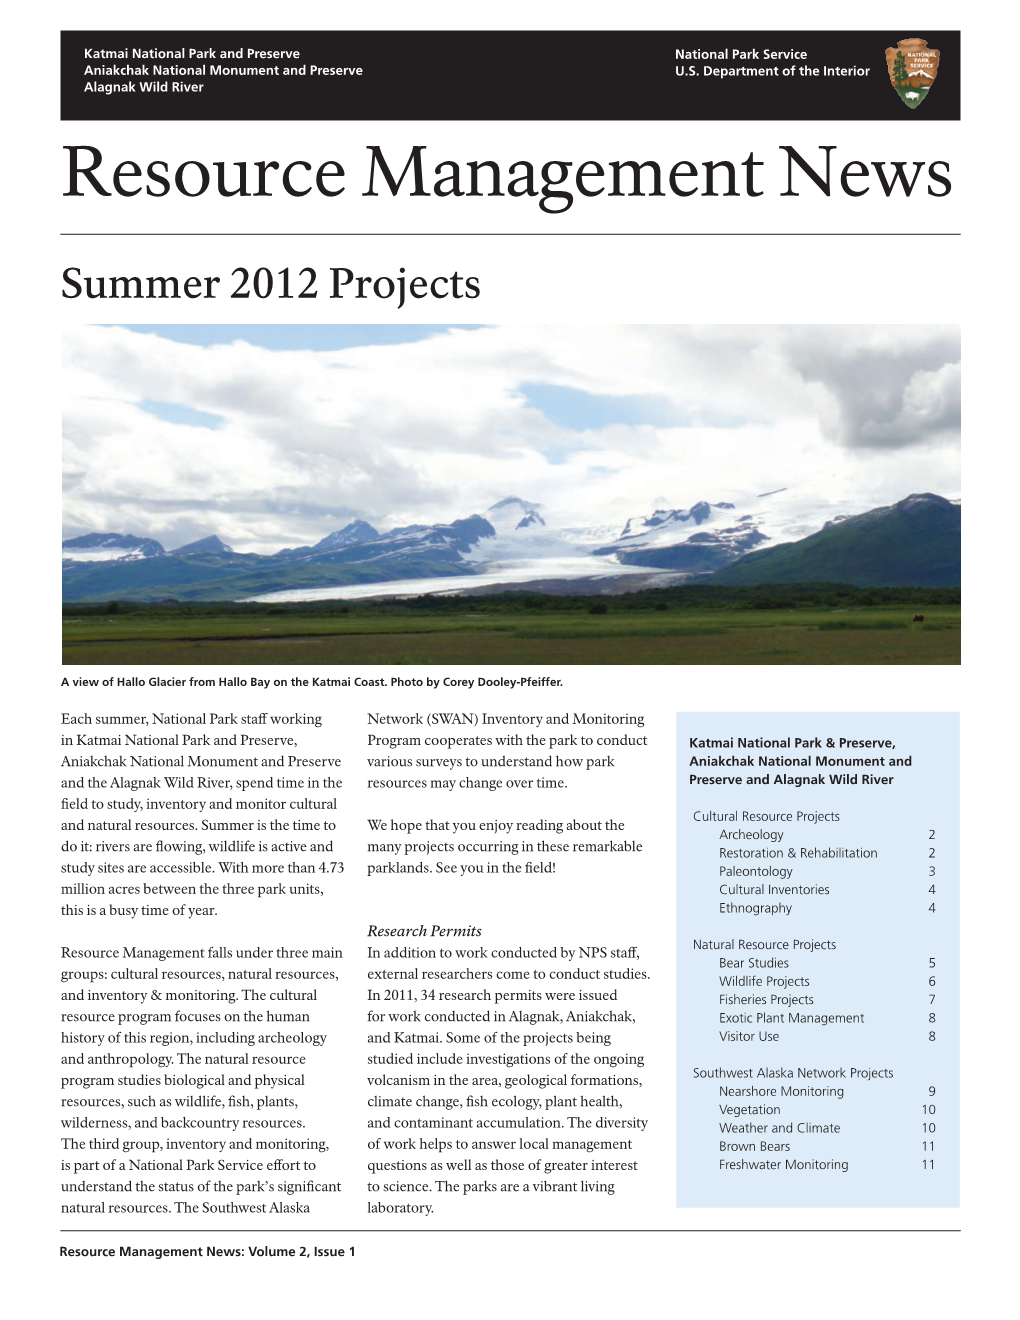 Resource Management News